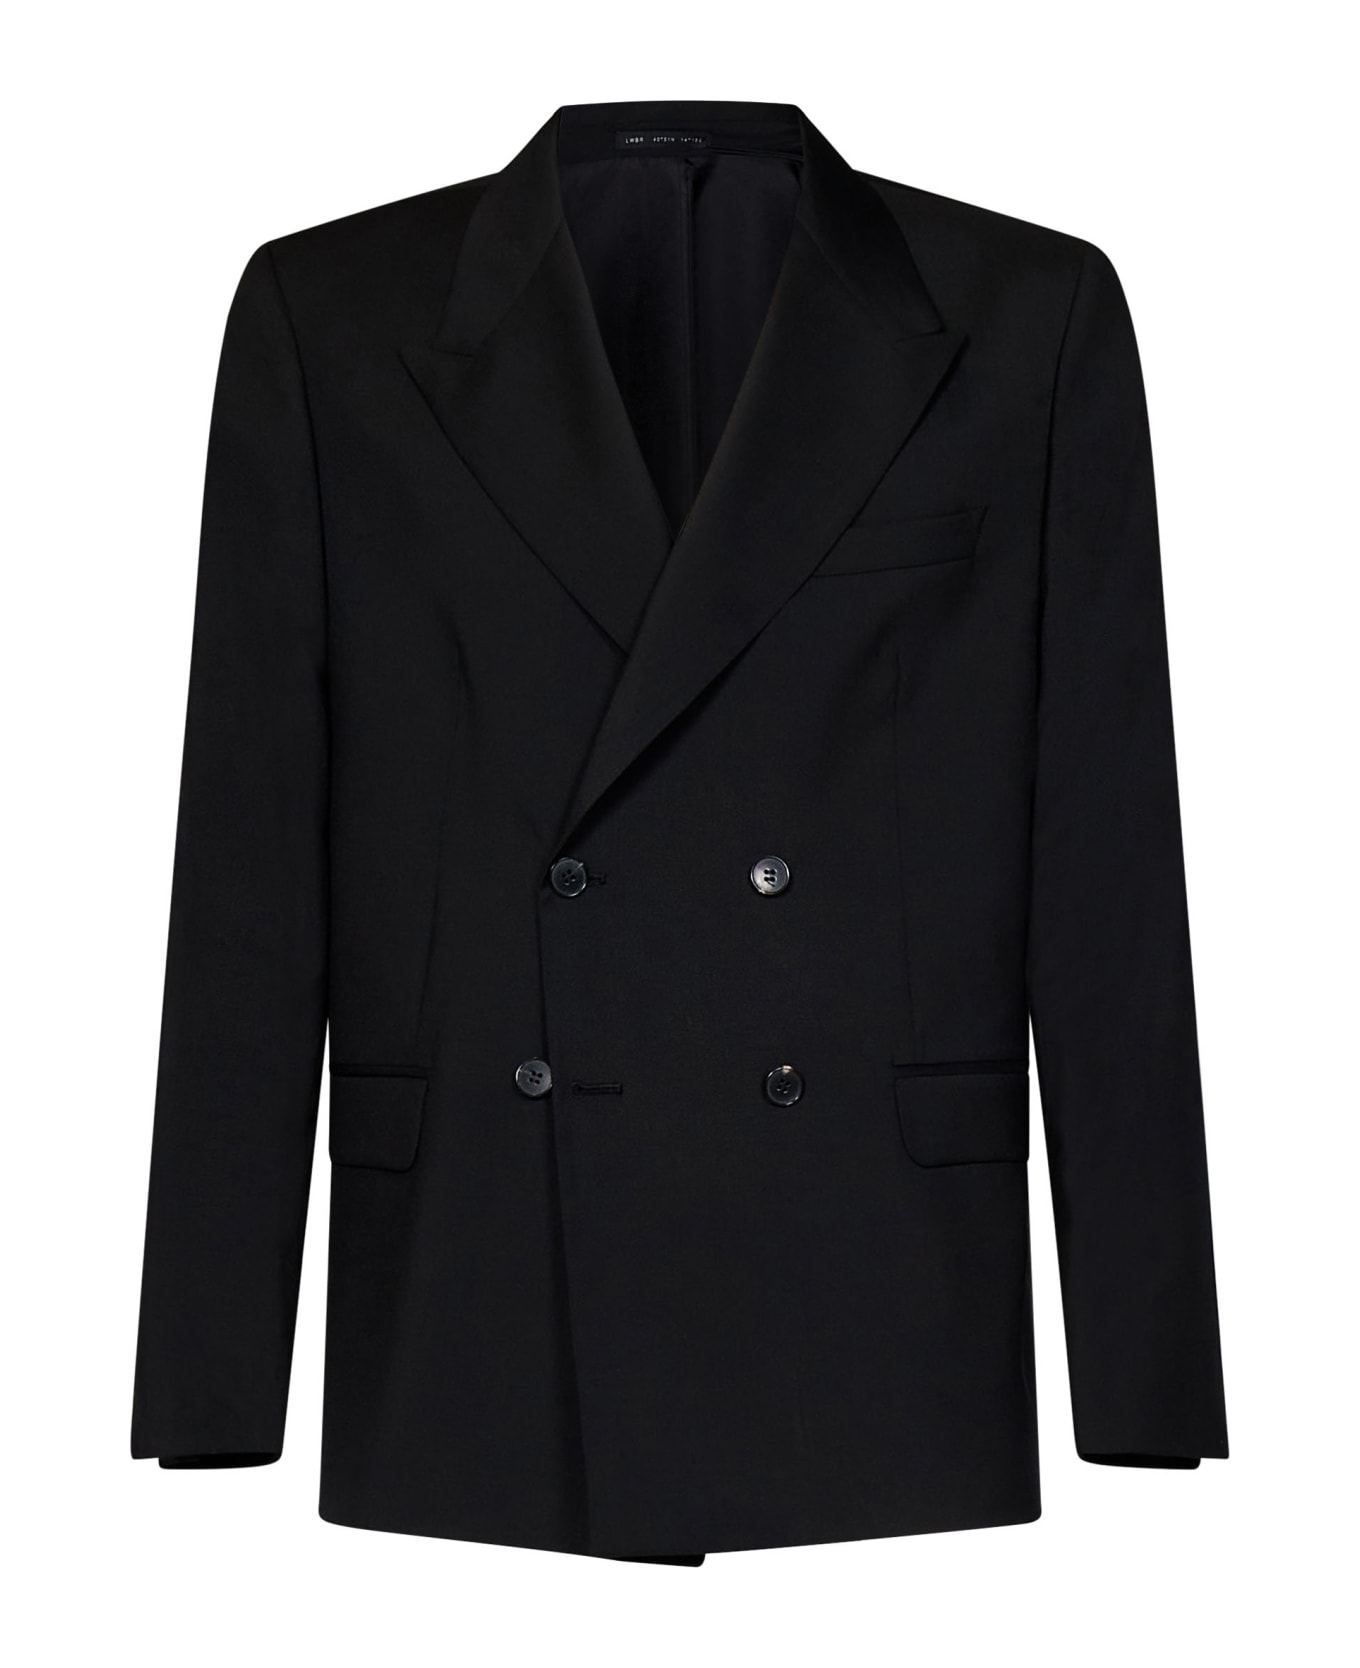 Low Brand 2b Suit - Black